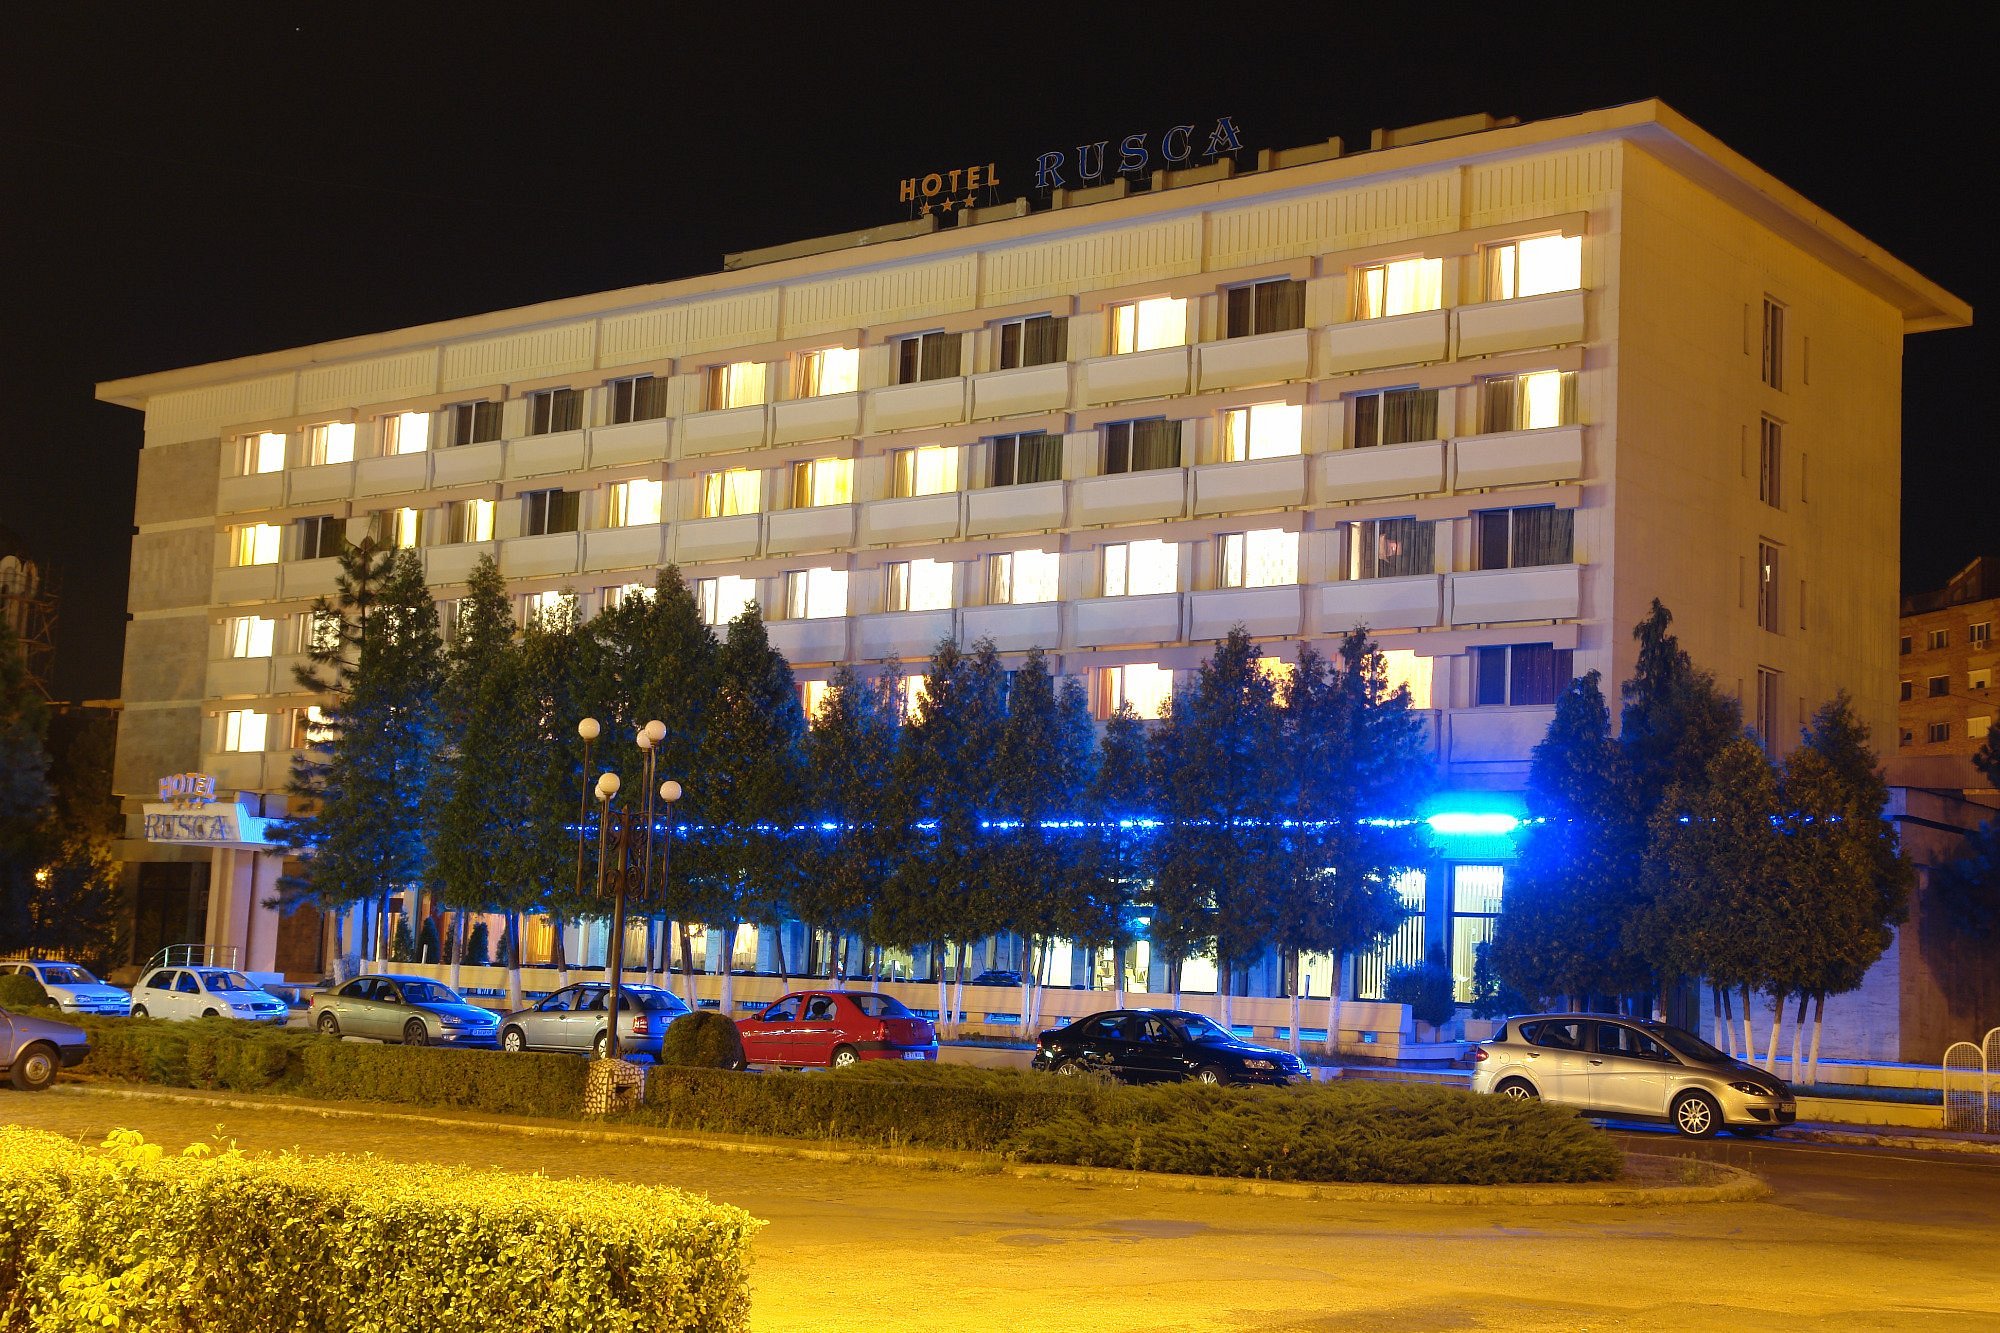 Rusca Hotel image